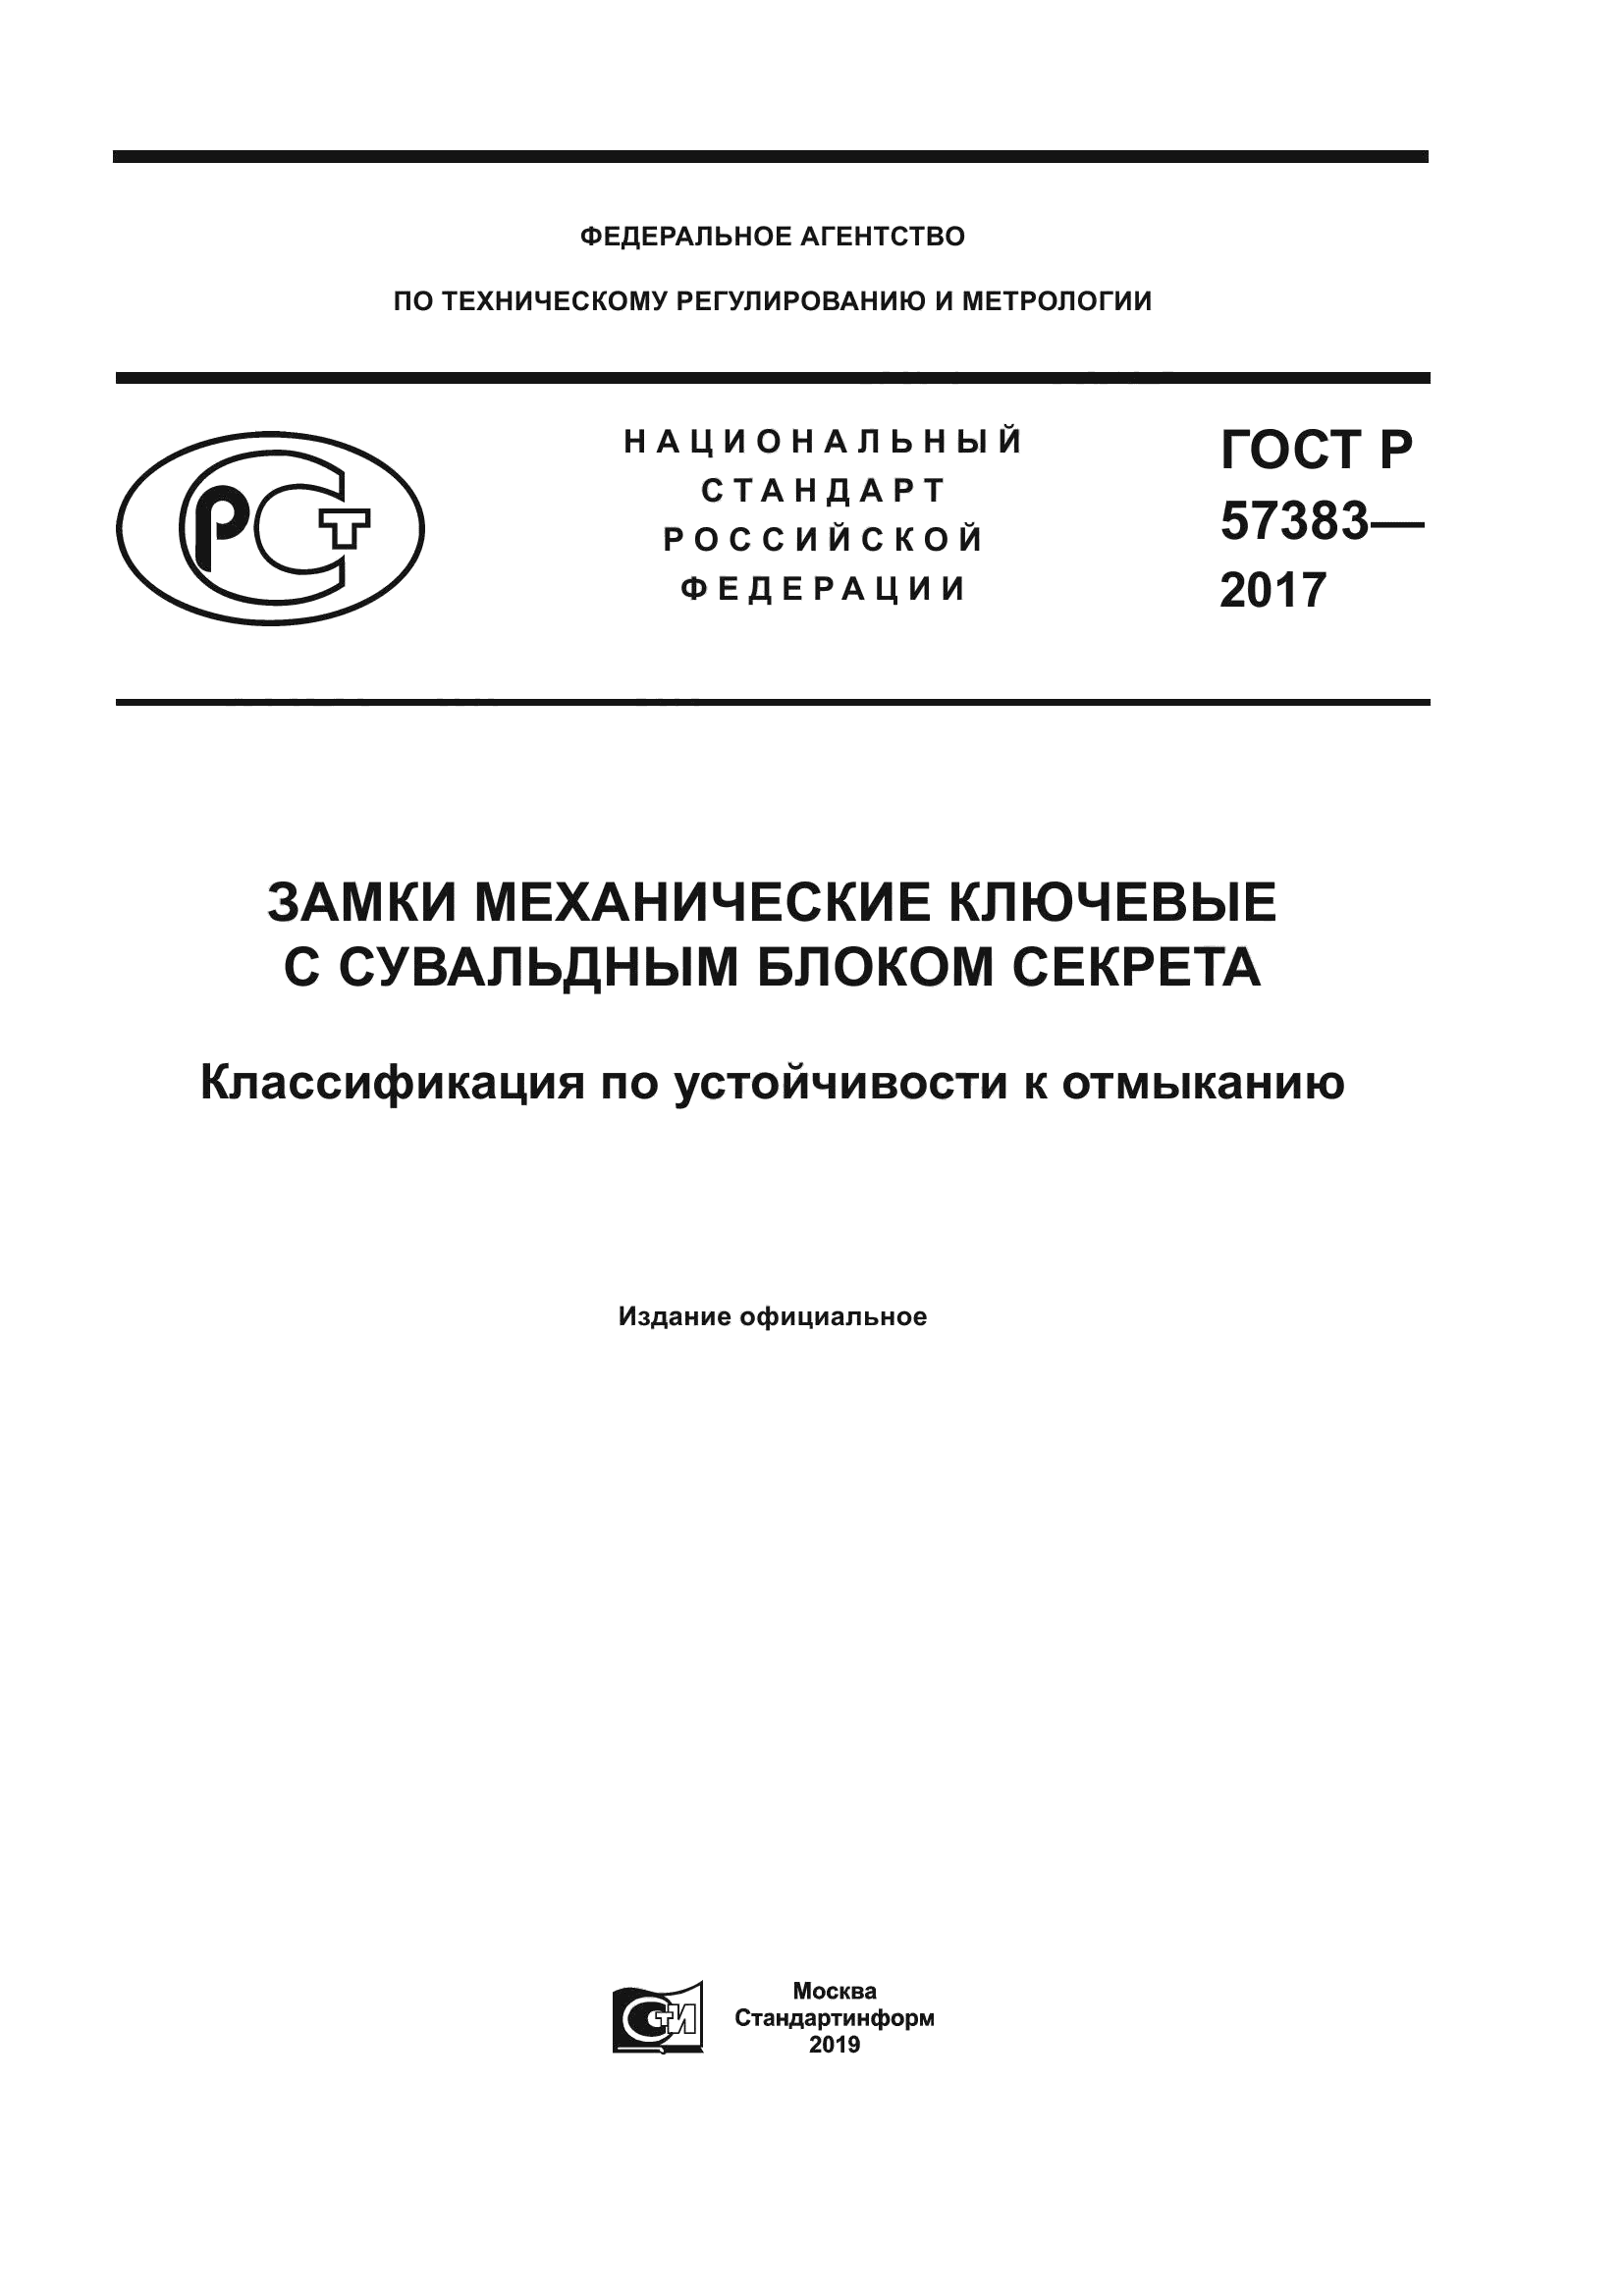 ГОСТ Р 57383-2017